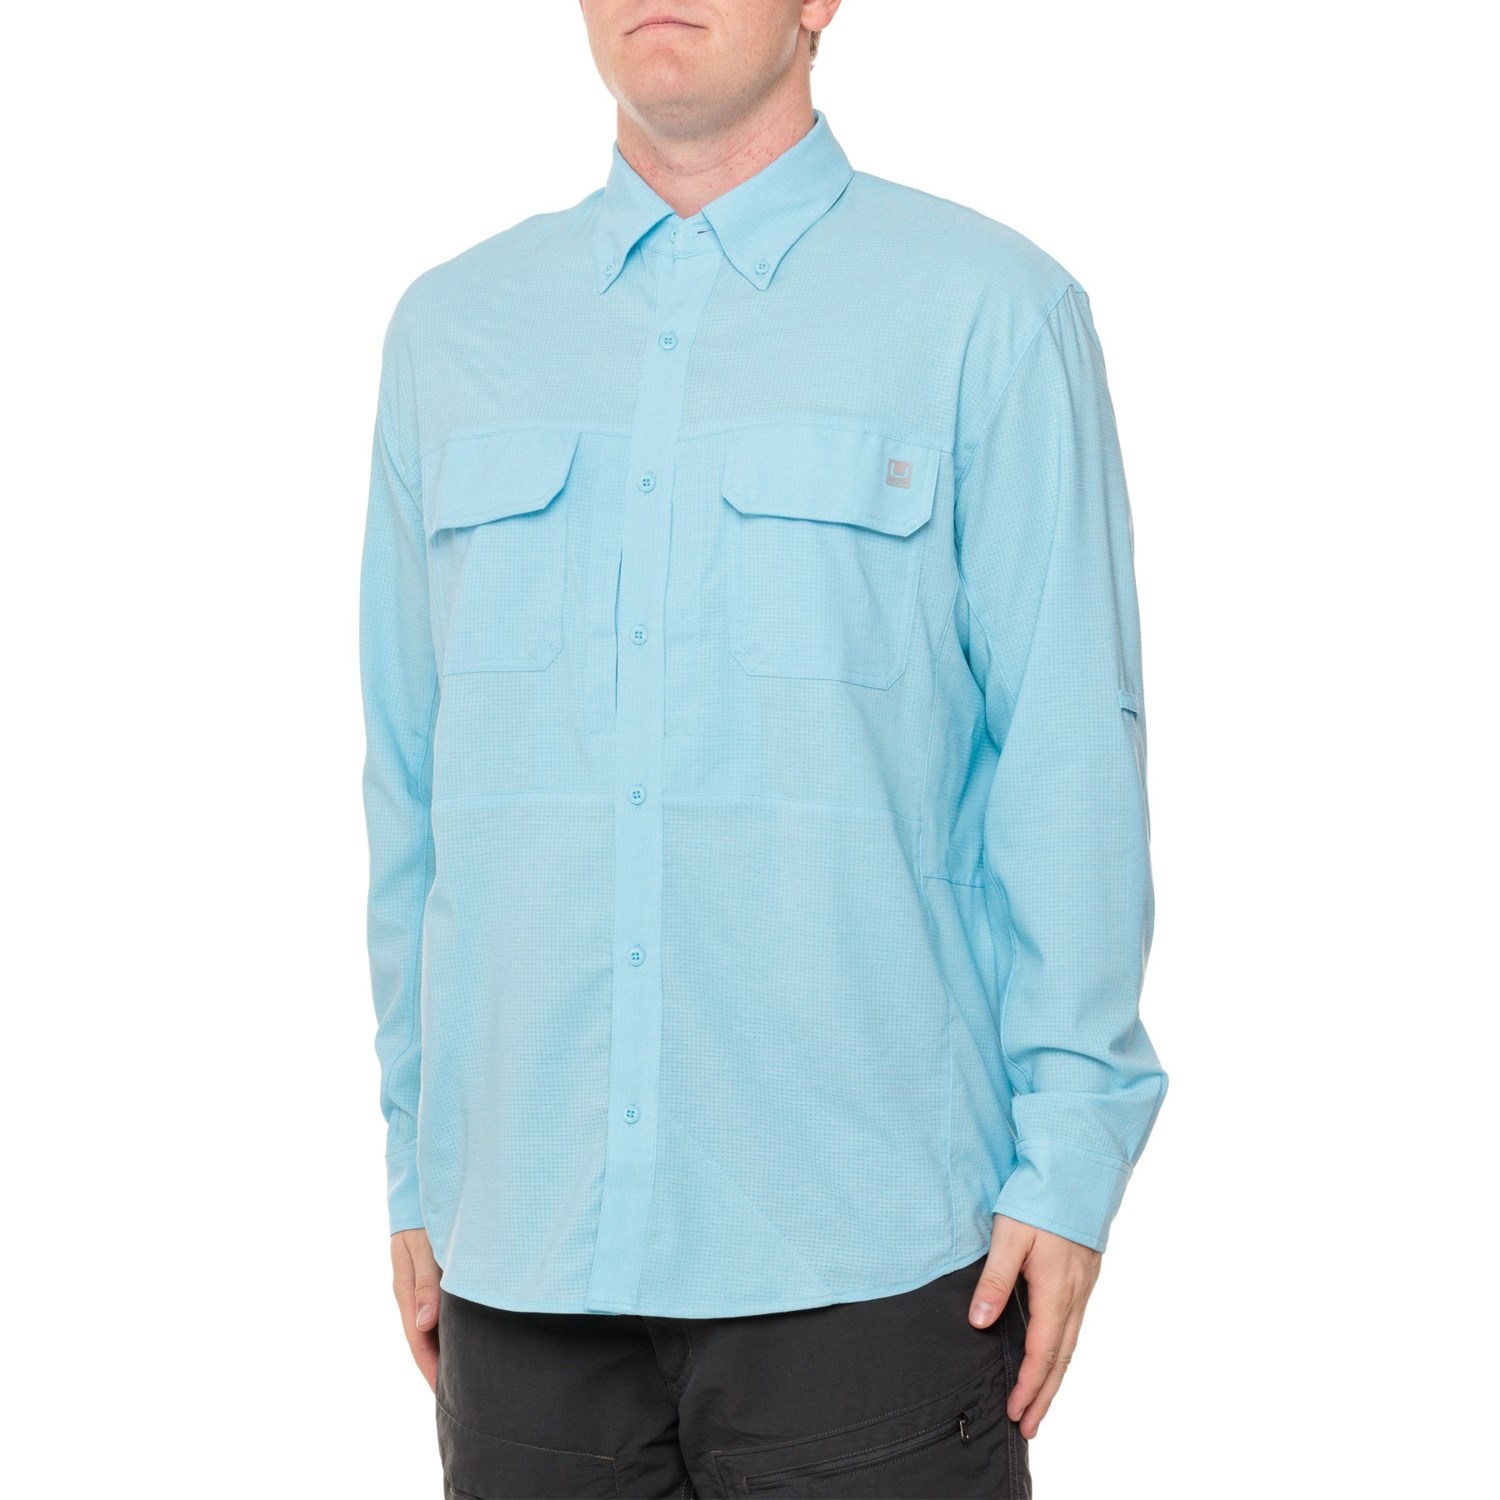 Huk A1A Woven Shirt - UPF 30+, Long Sleeve - Save 58%